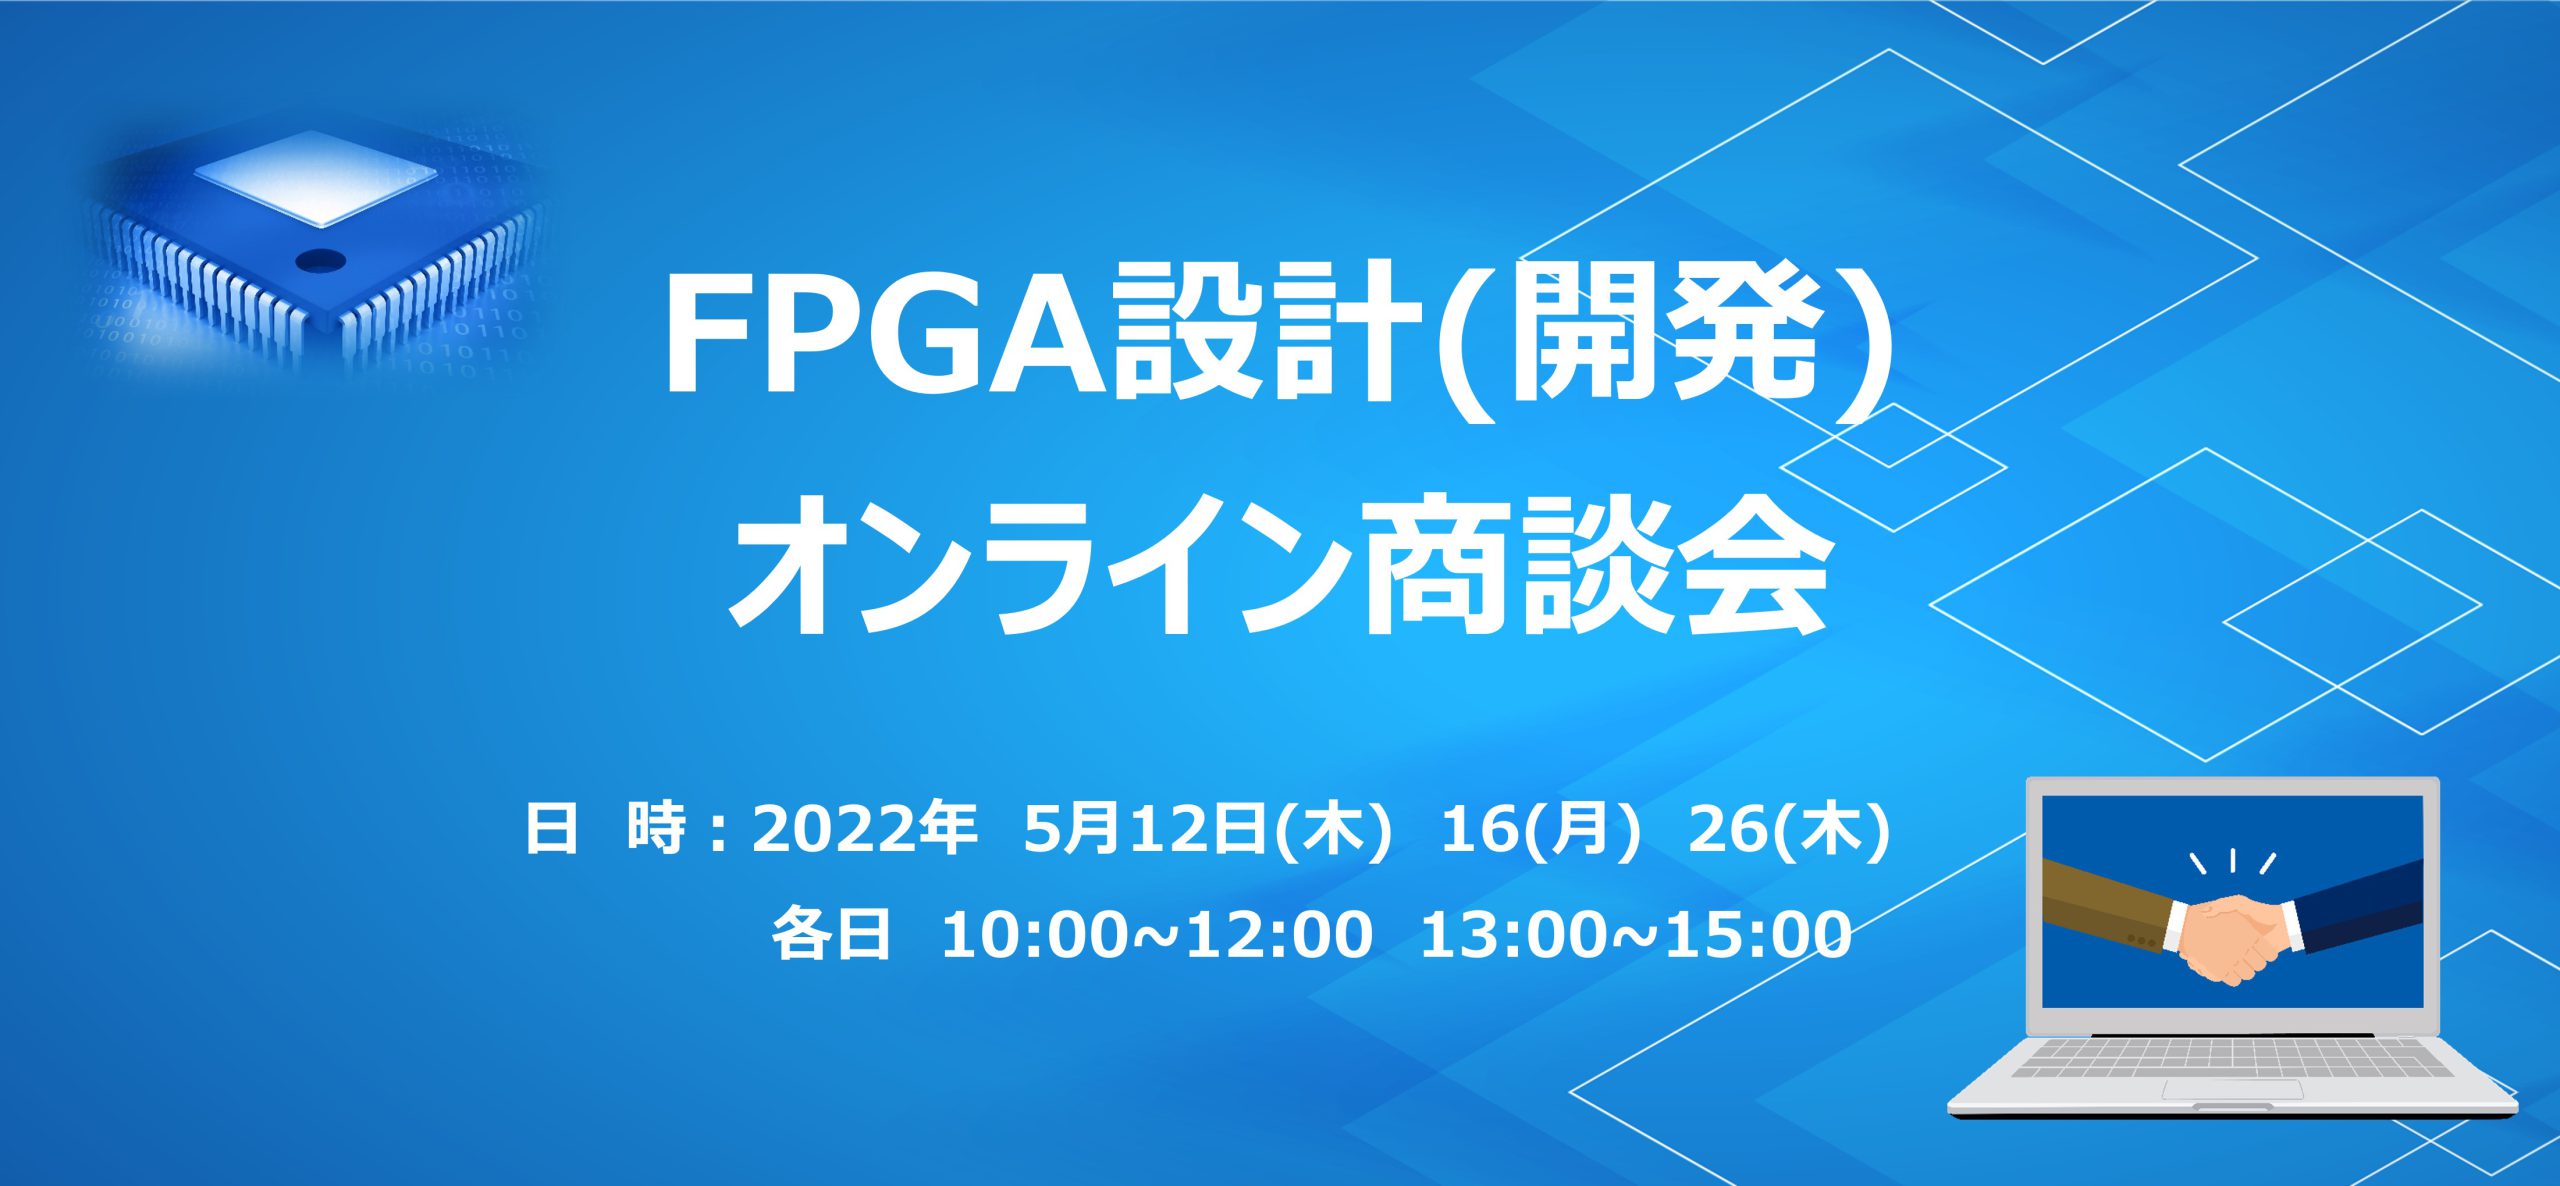 【FPGA設計(開発)】オンライン商談会開催のお知らせ